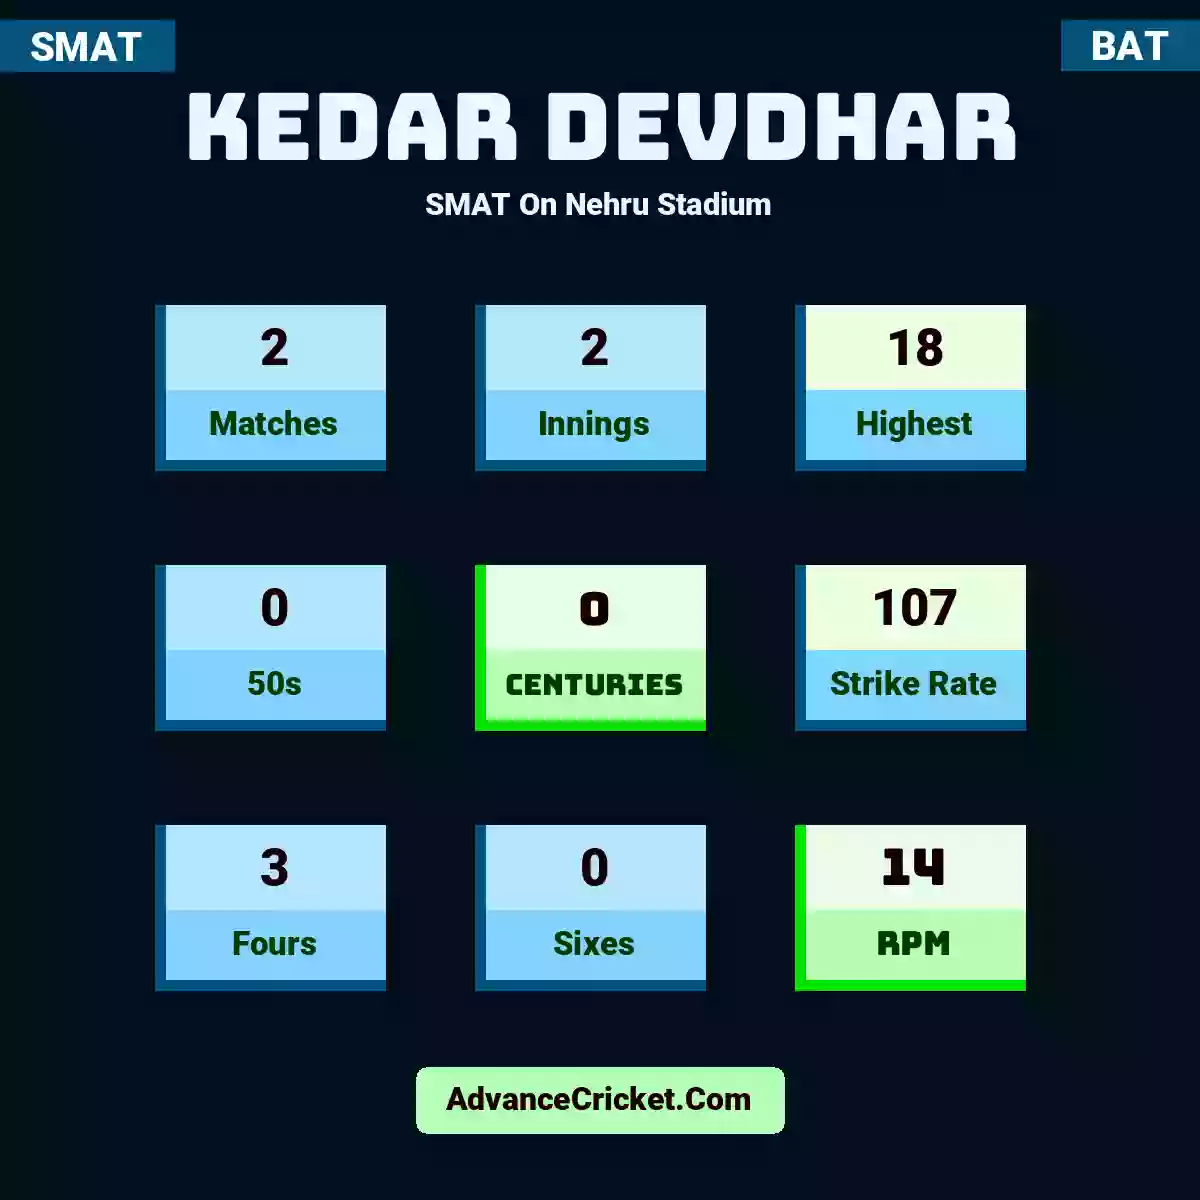 Kedar Devdhar SMAT  On Nehru Stadium, Kedar Devdhar played 2 matches, scored 18 runs as highest, 0 half-centuries, and 0 centuries, with a strike rate of 107. K.Devdhar hit 3 fours and 0 sixes, with an RPM of 14.